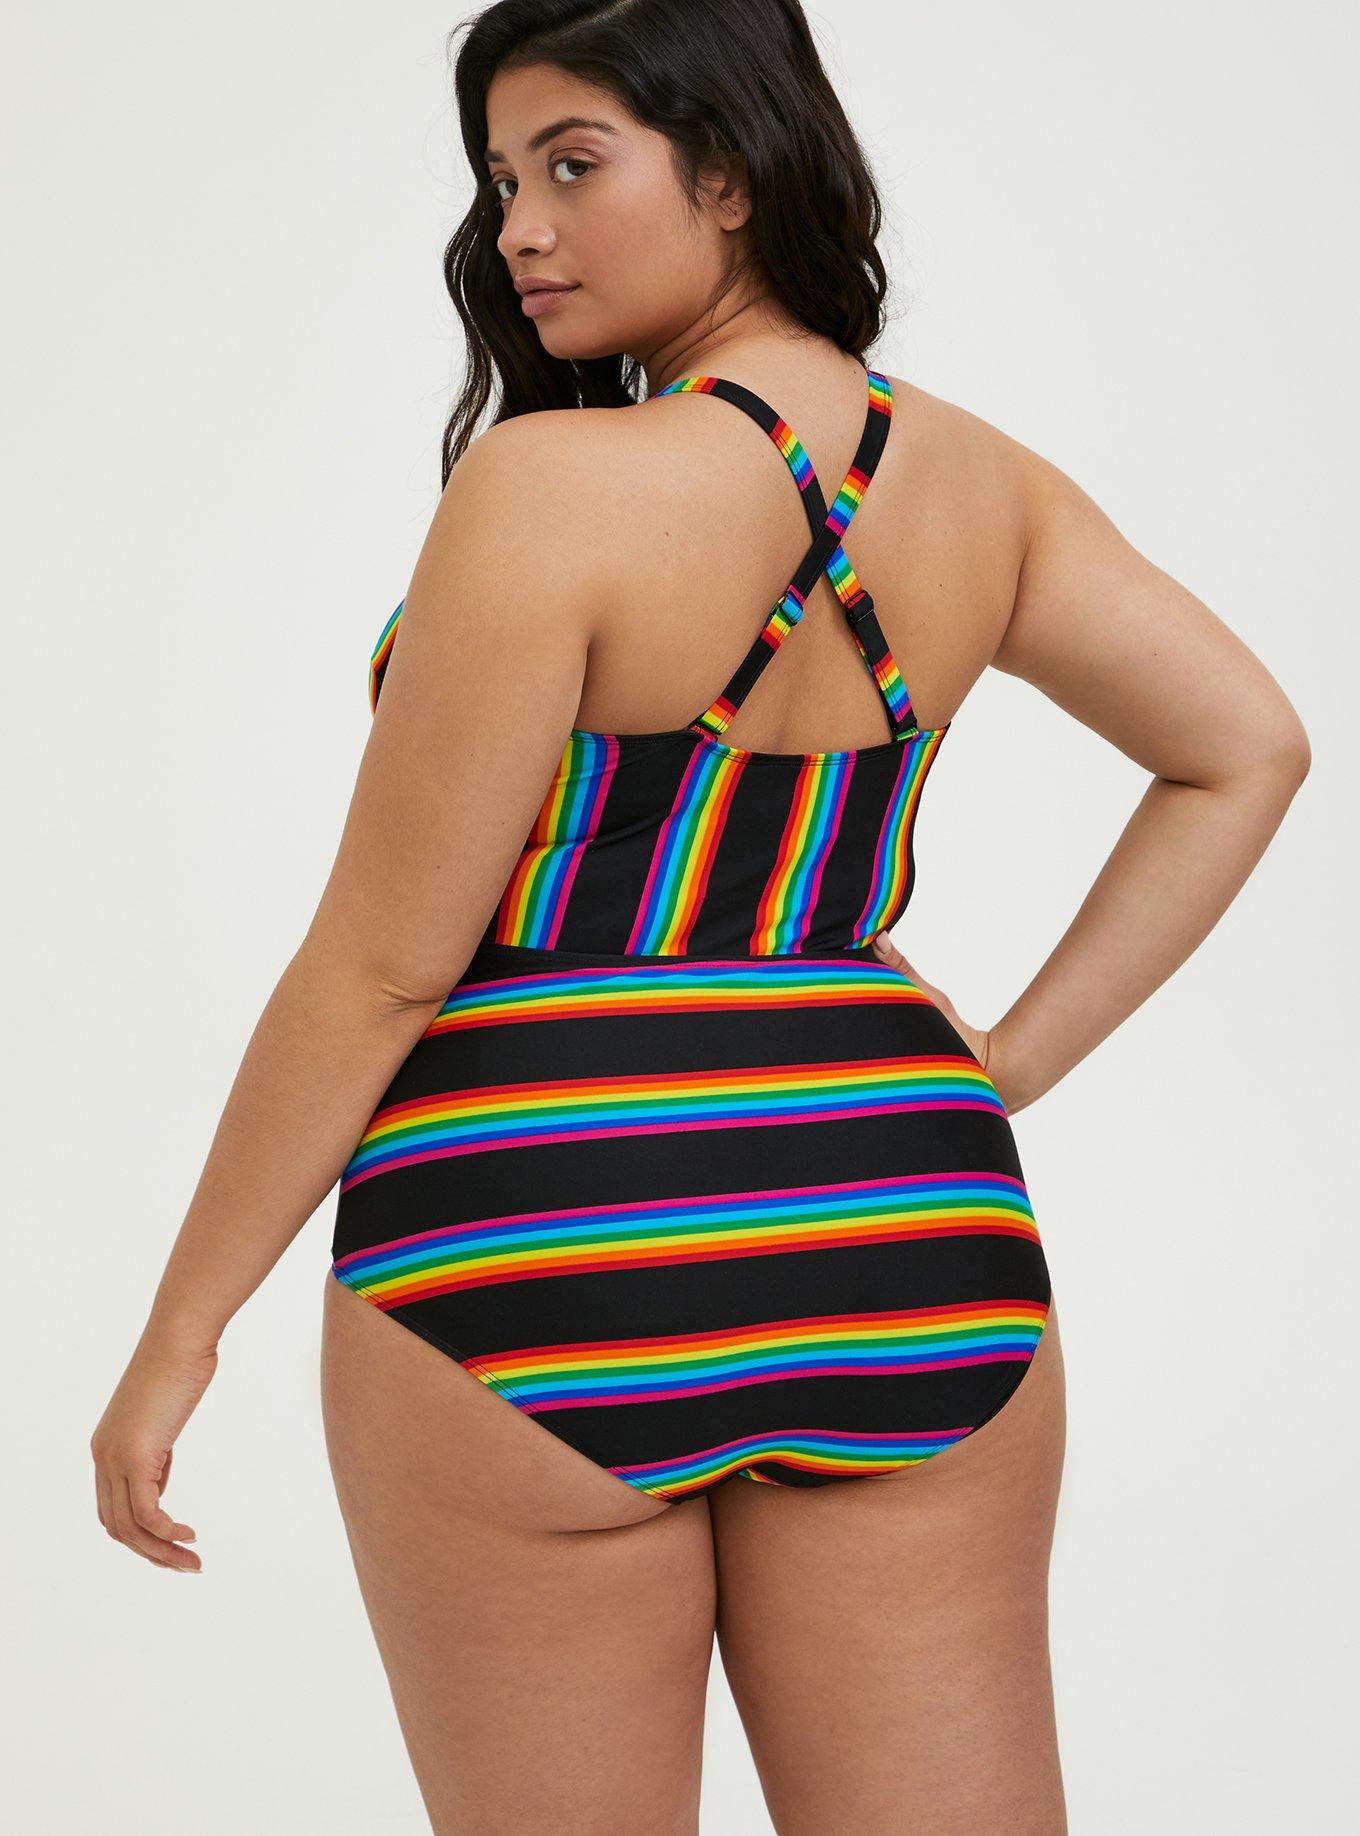 Plus Size - Black Rainbow Stripe Wireless One-Piece Swimsuit - Torrid